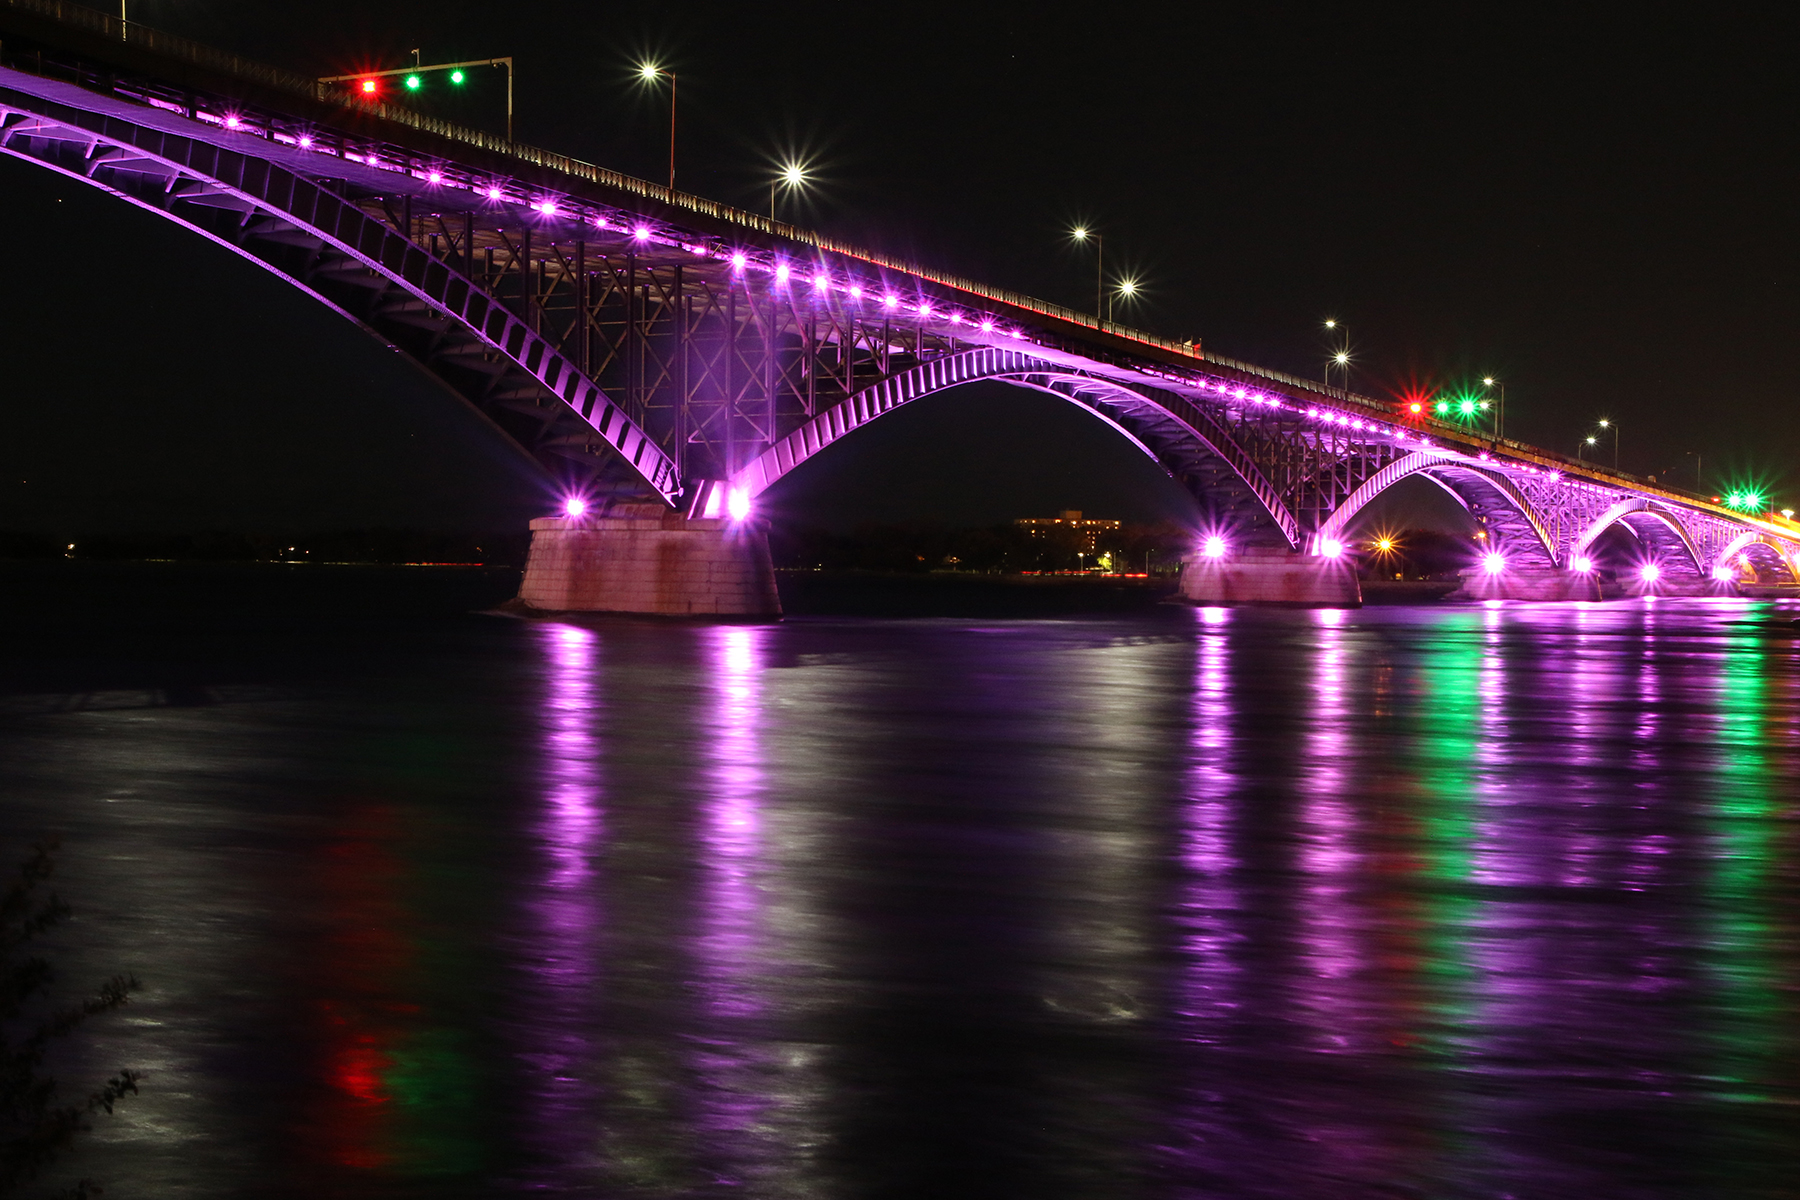 The Peace Bridge at night with purple lighting